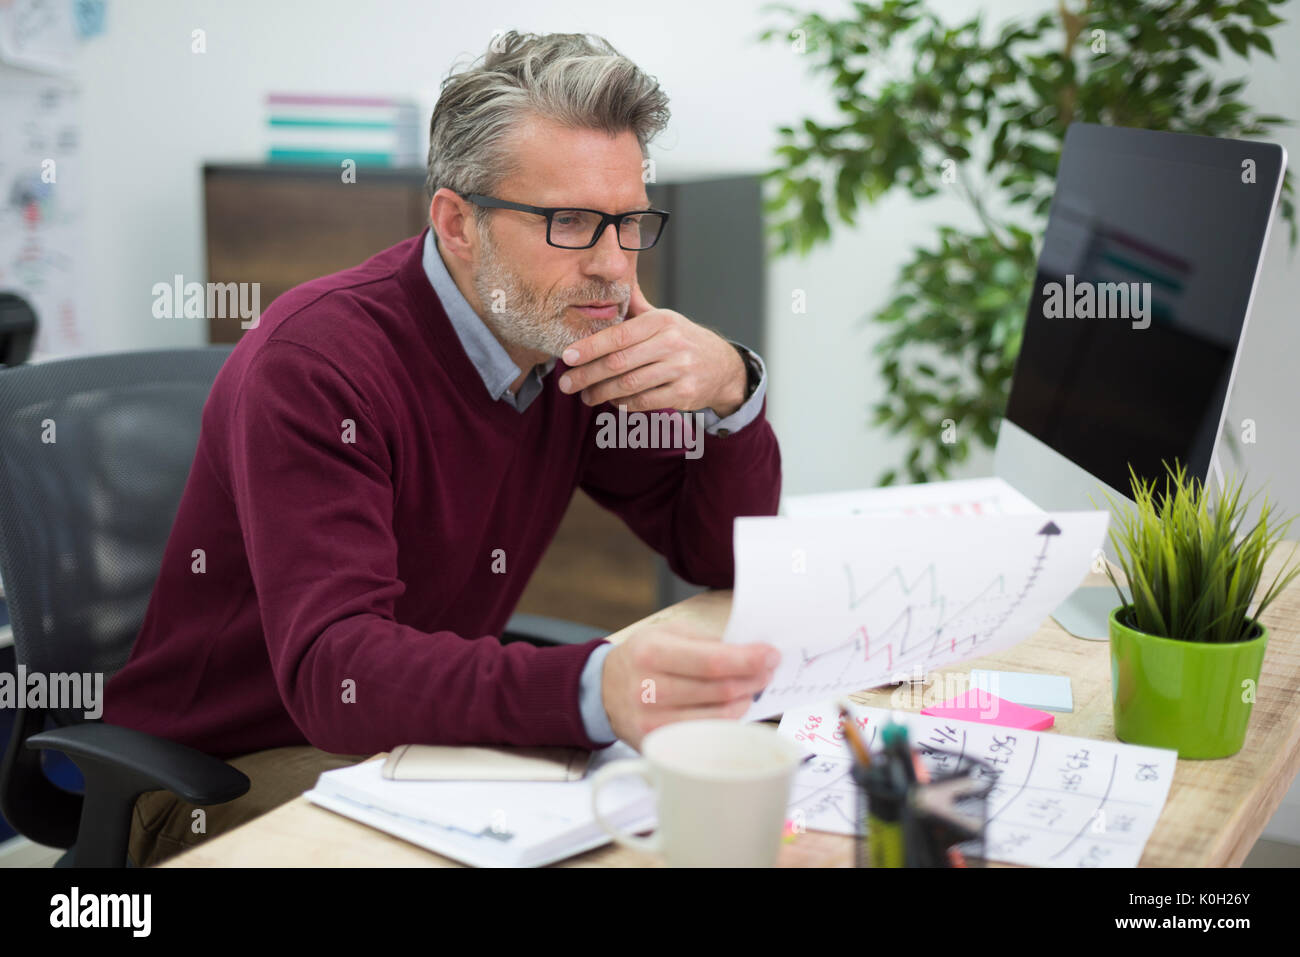 Hardworking man reading some important documents Stock Photo